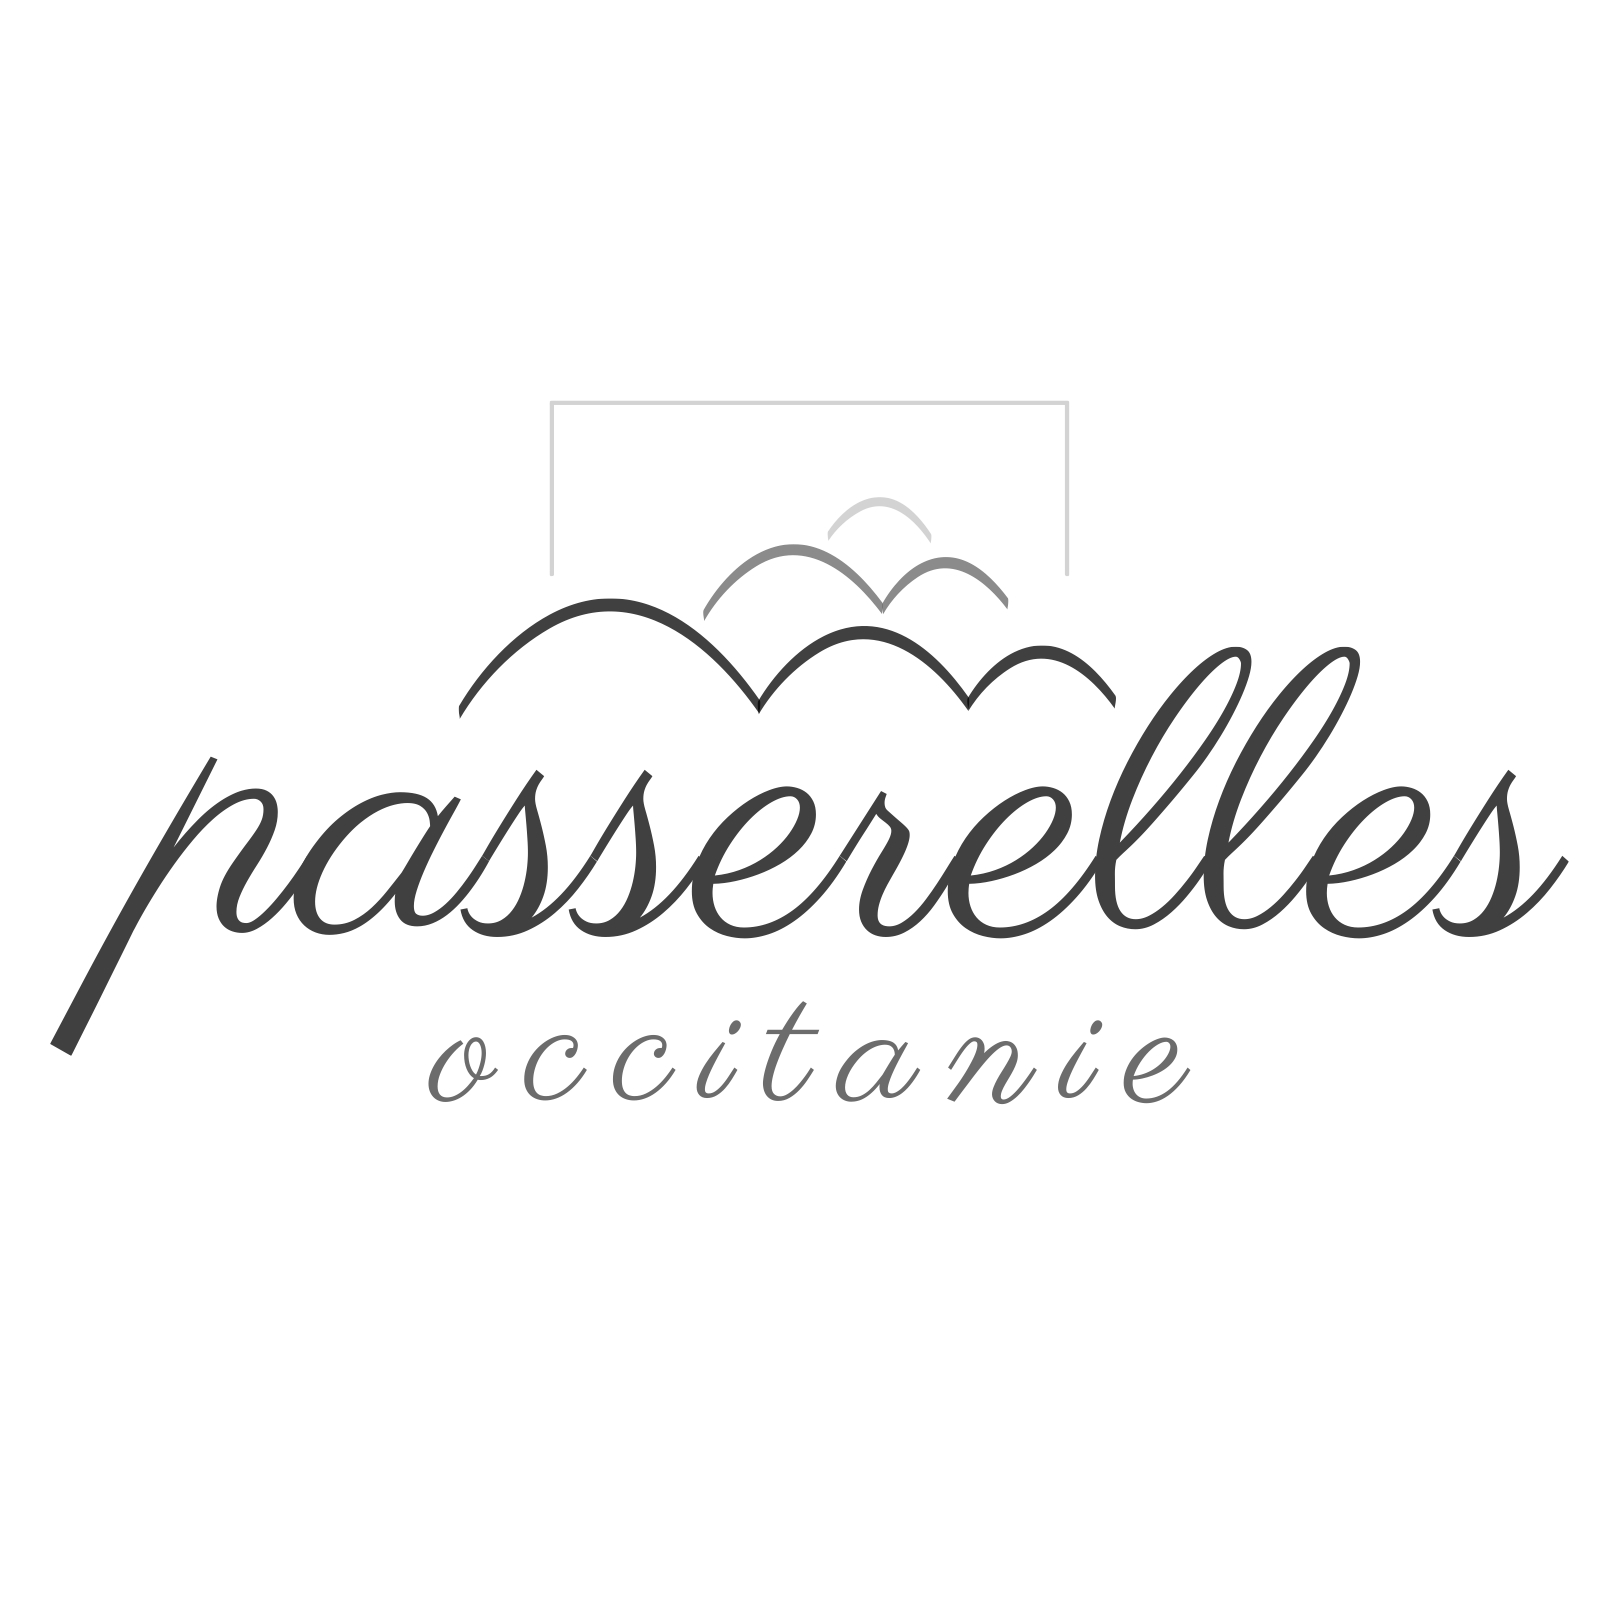 274-logo-passerelles-occitanie-officiel-ok.jpg